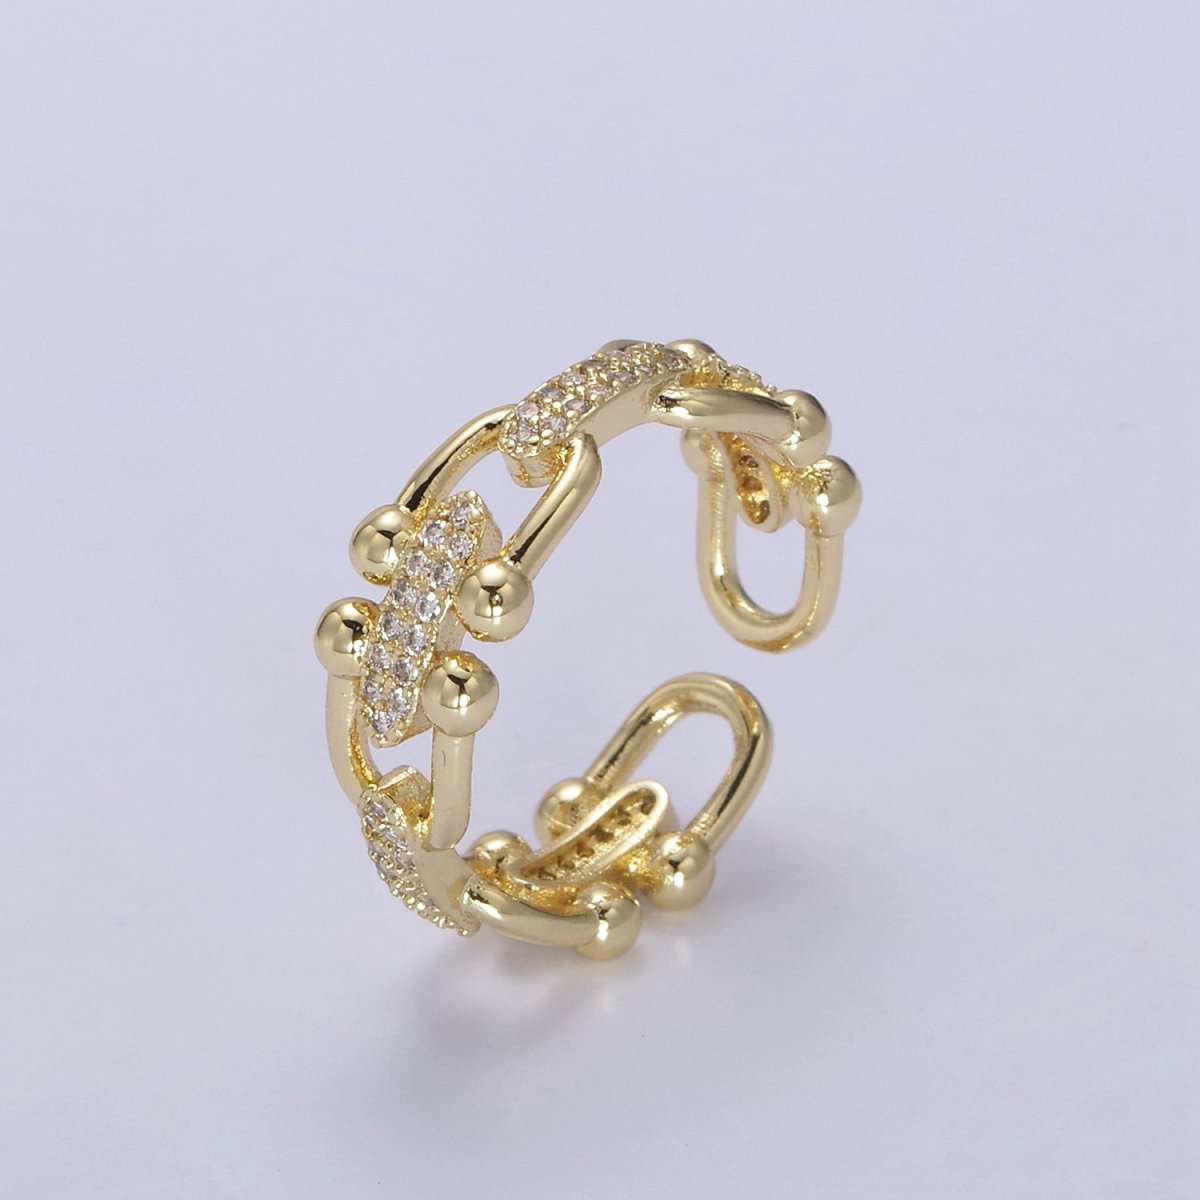 Gold Filled CZ Statement Jewelry Open Adjustable Ring U-321 U-322 - DLUXCA